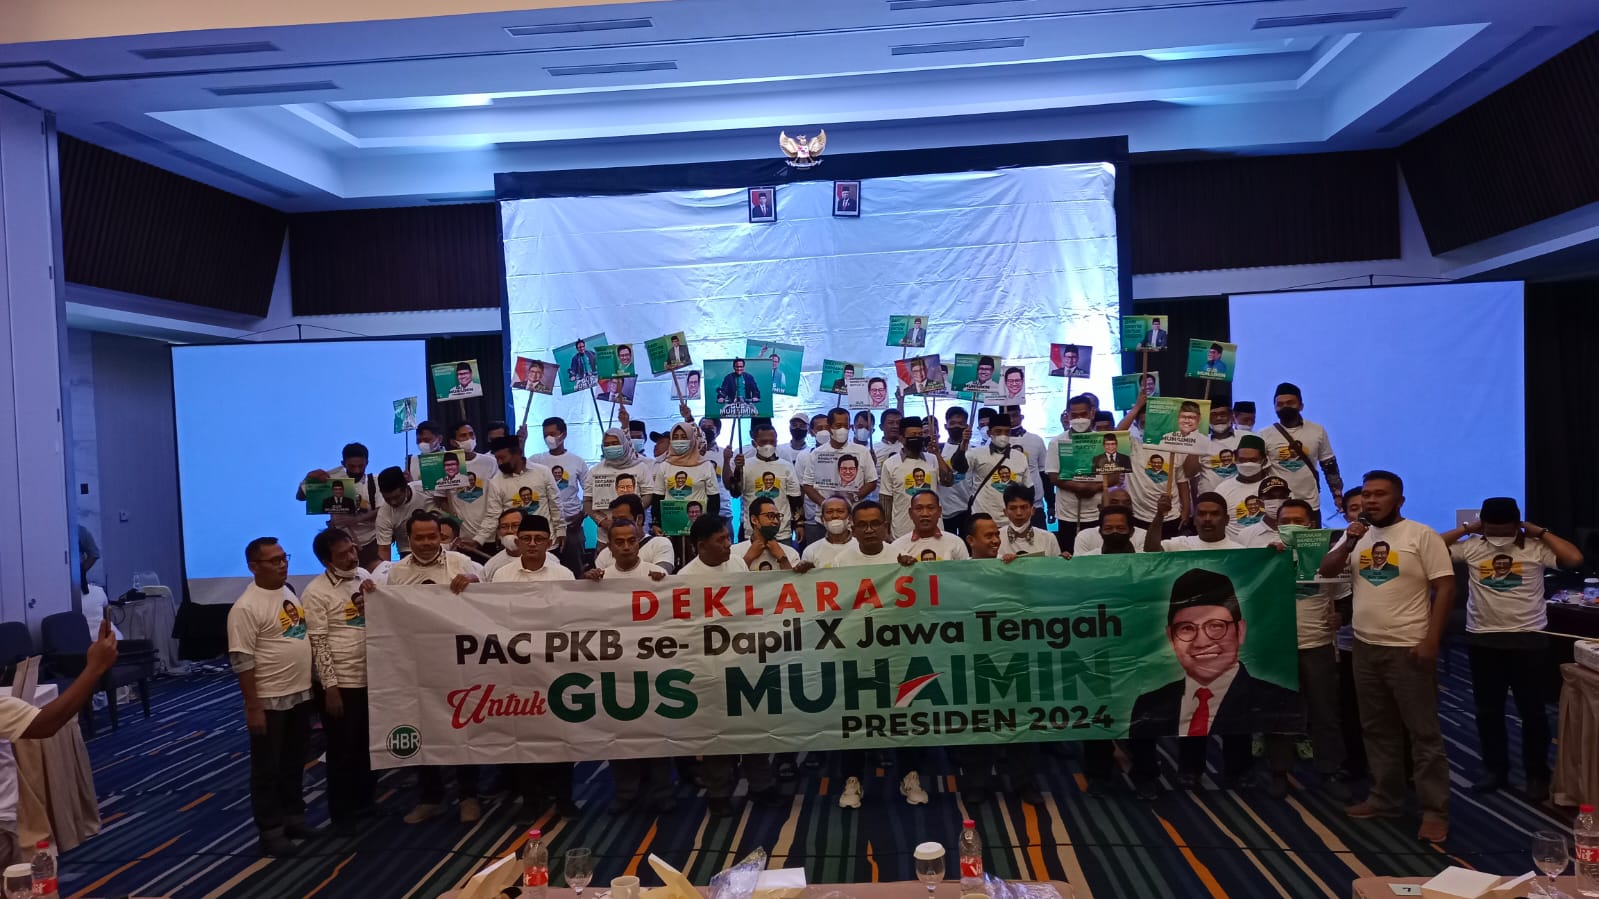 PAC PKB se Dapil X Jateng Deklarasikan Gus Muhaimin jadi Presiden 2024